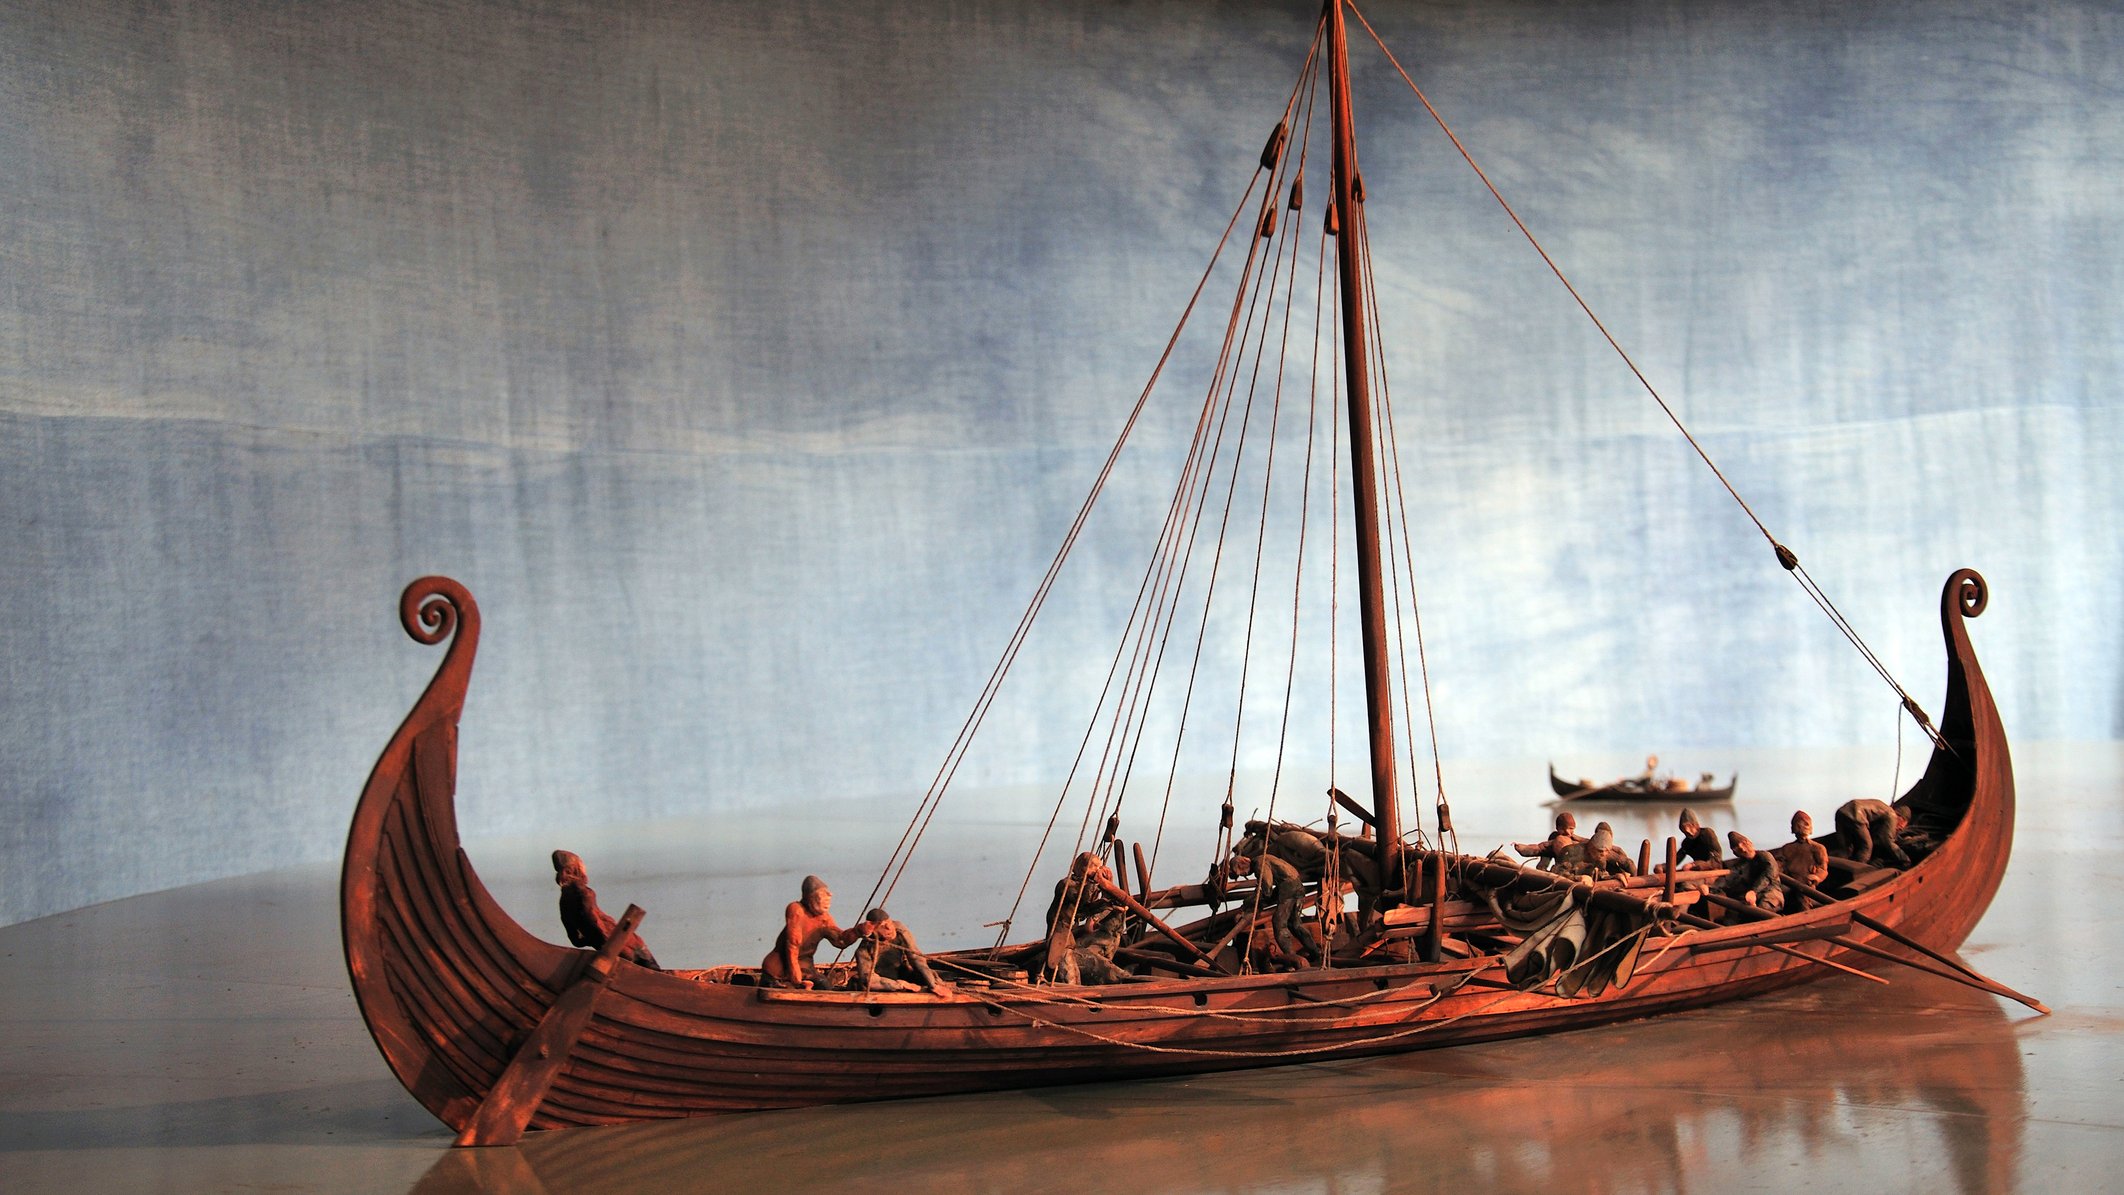 Barco viking no Museu de Estocolmo, na Suécia